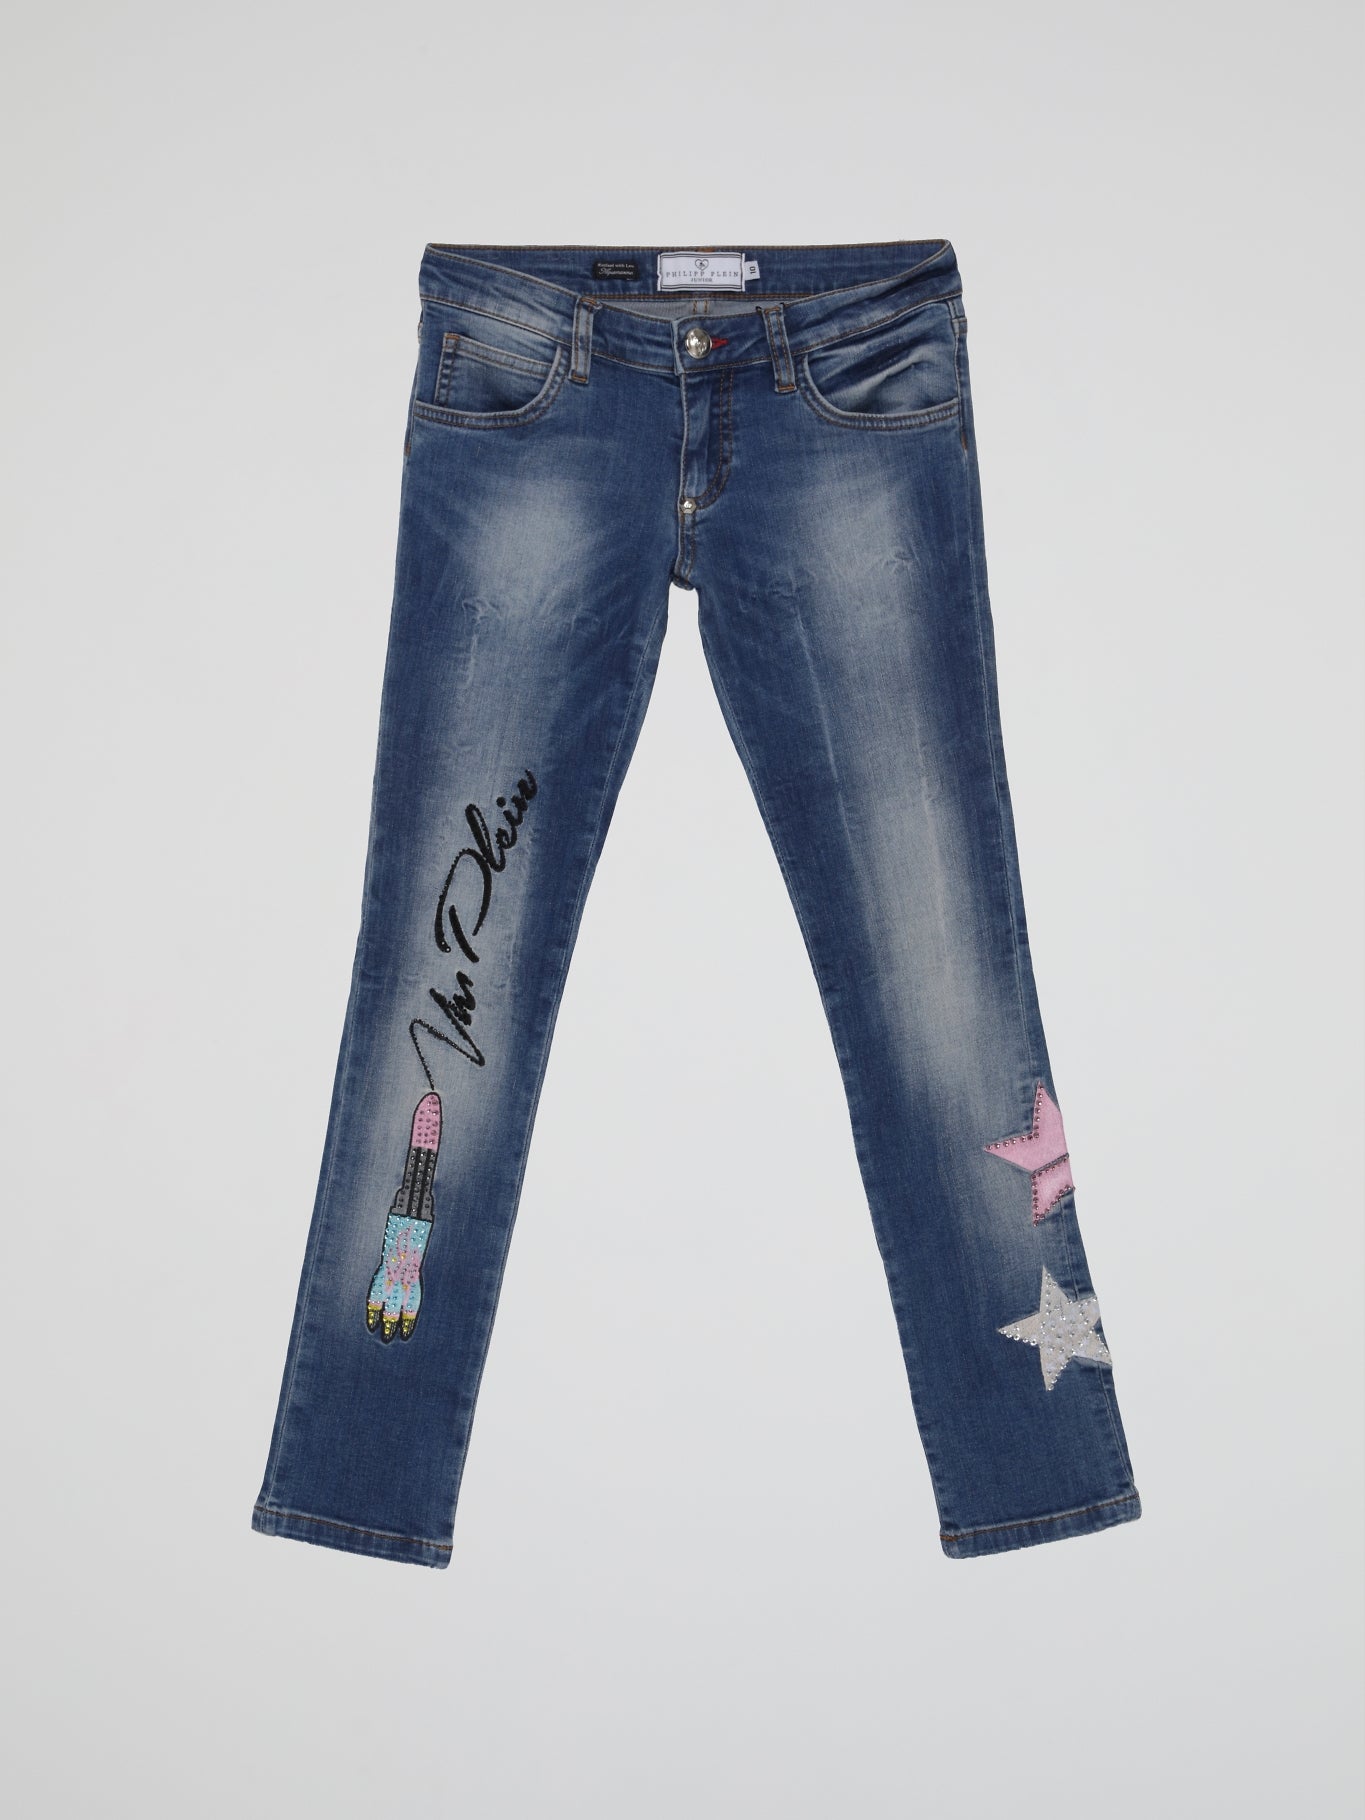 academisch waarom niet Incident, evenement Blue Star Detail Denim Jeans (Kids) – Maison-B-More Global Store